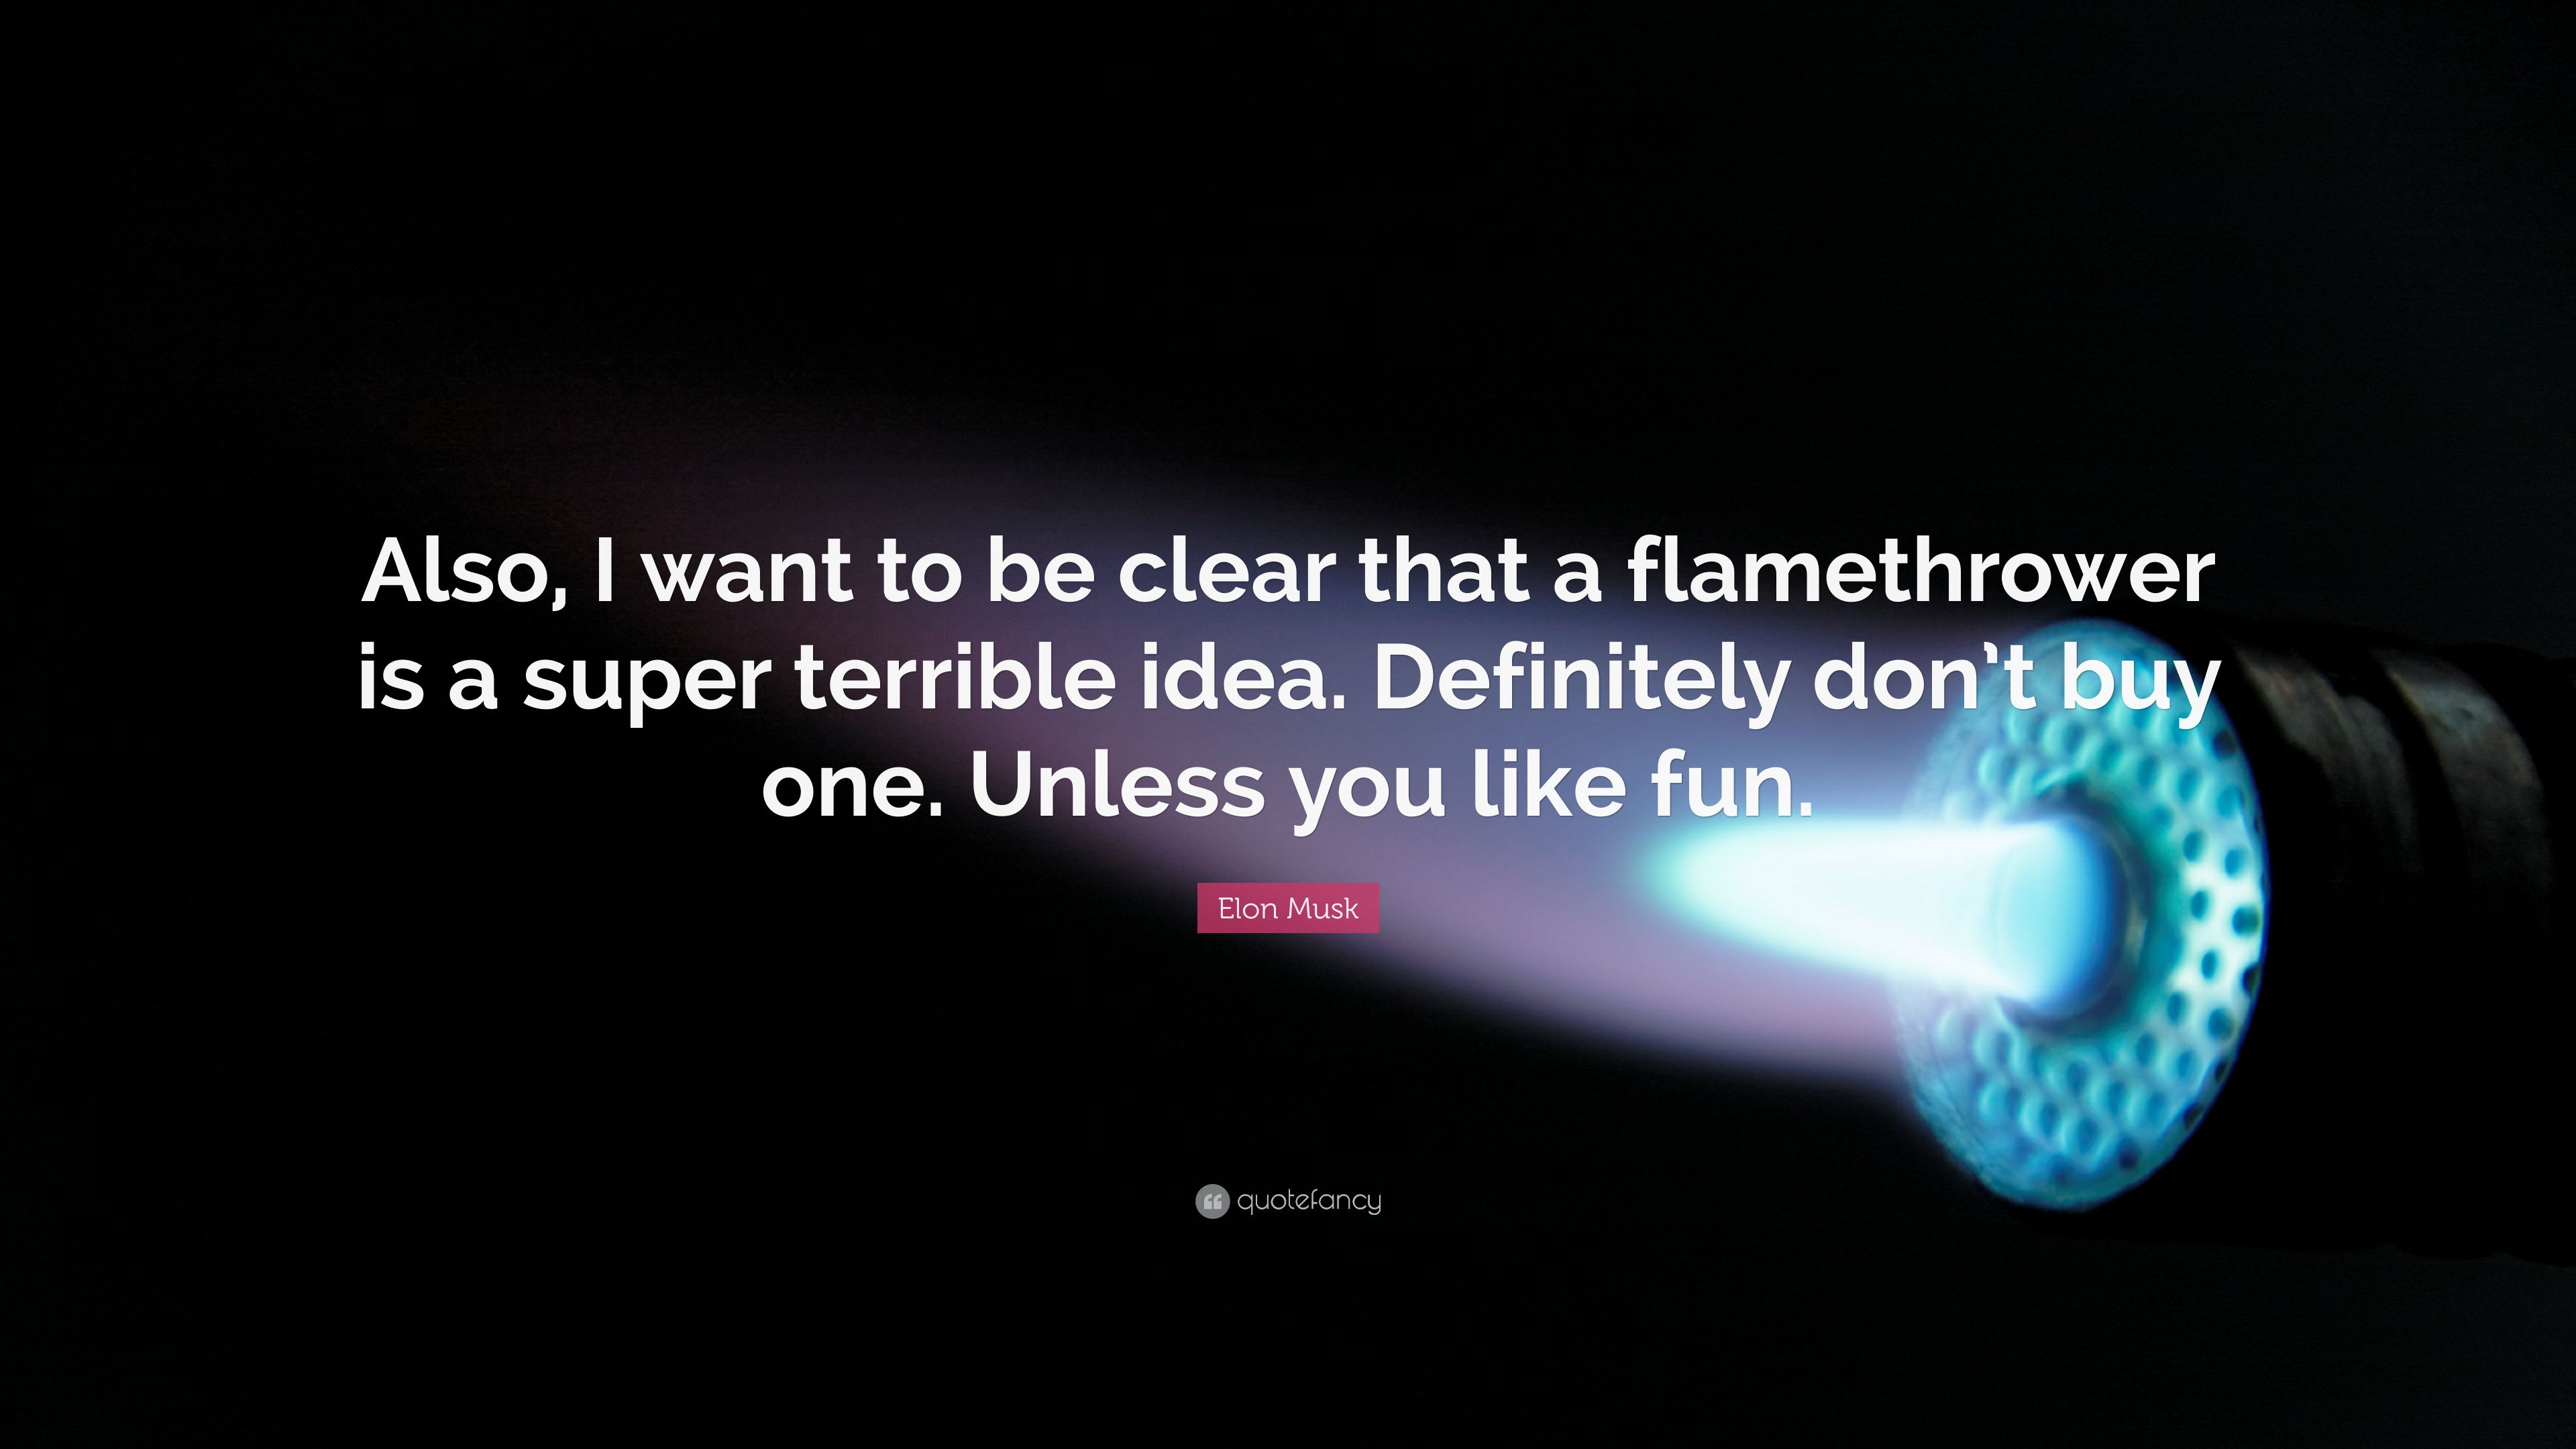 Elon Musk On Boring Company Flamethrower (2021 Update)